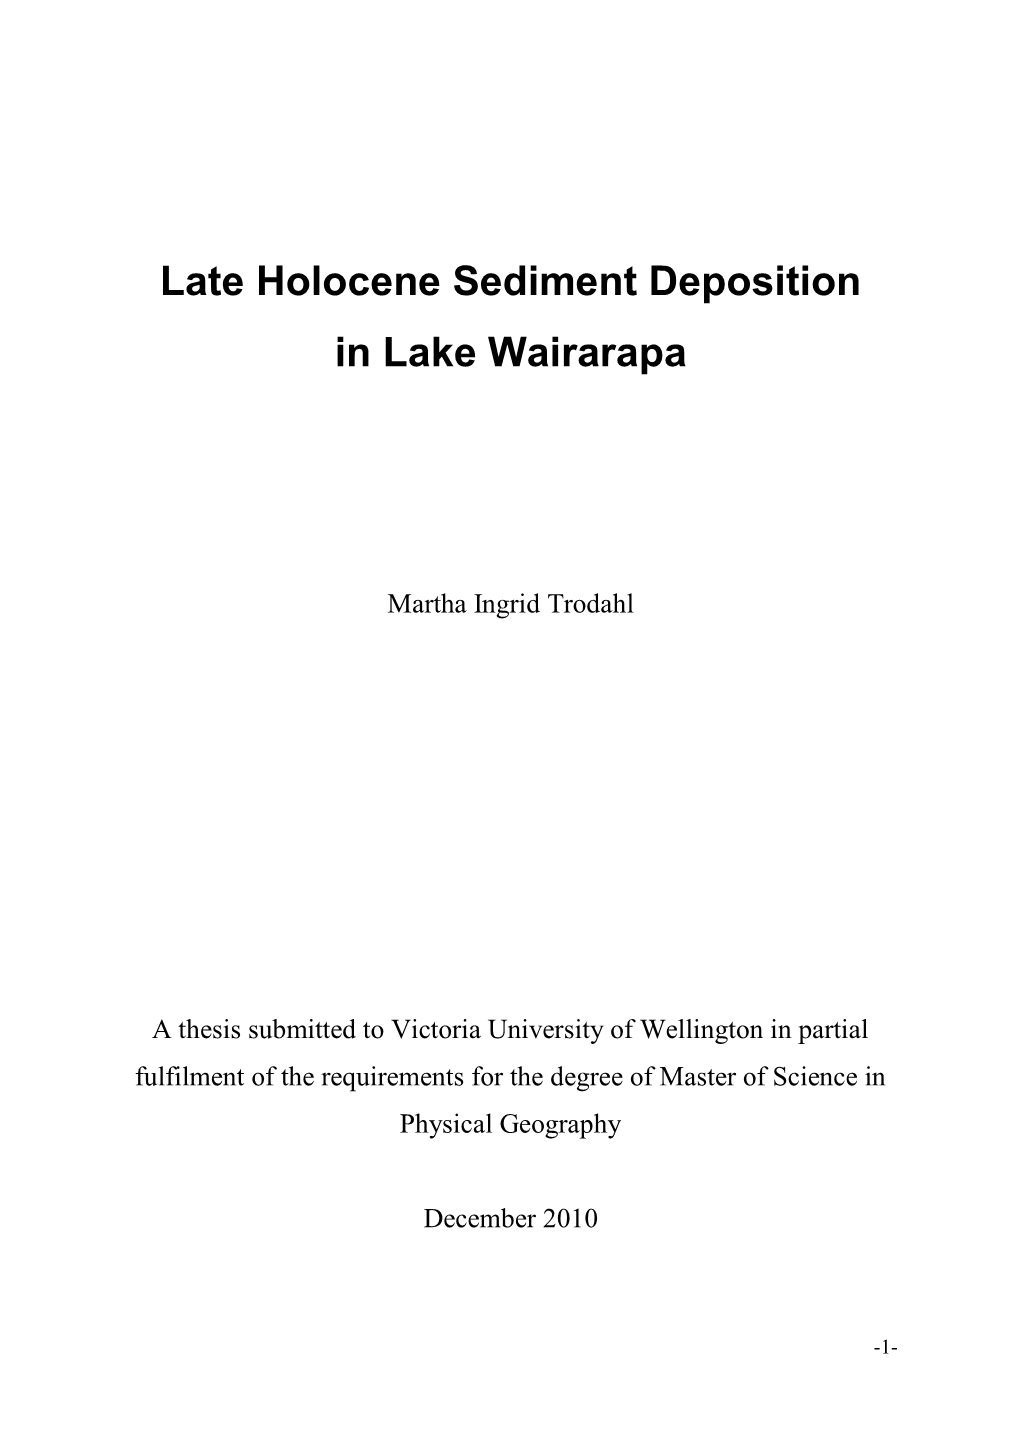 Late Holocene Sediment Deposition in Lake Wairarapa